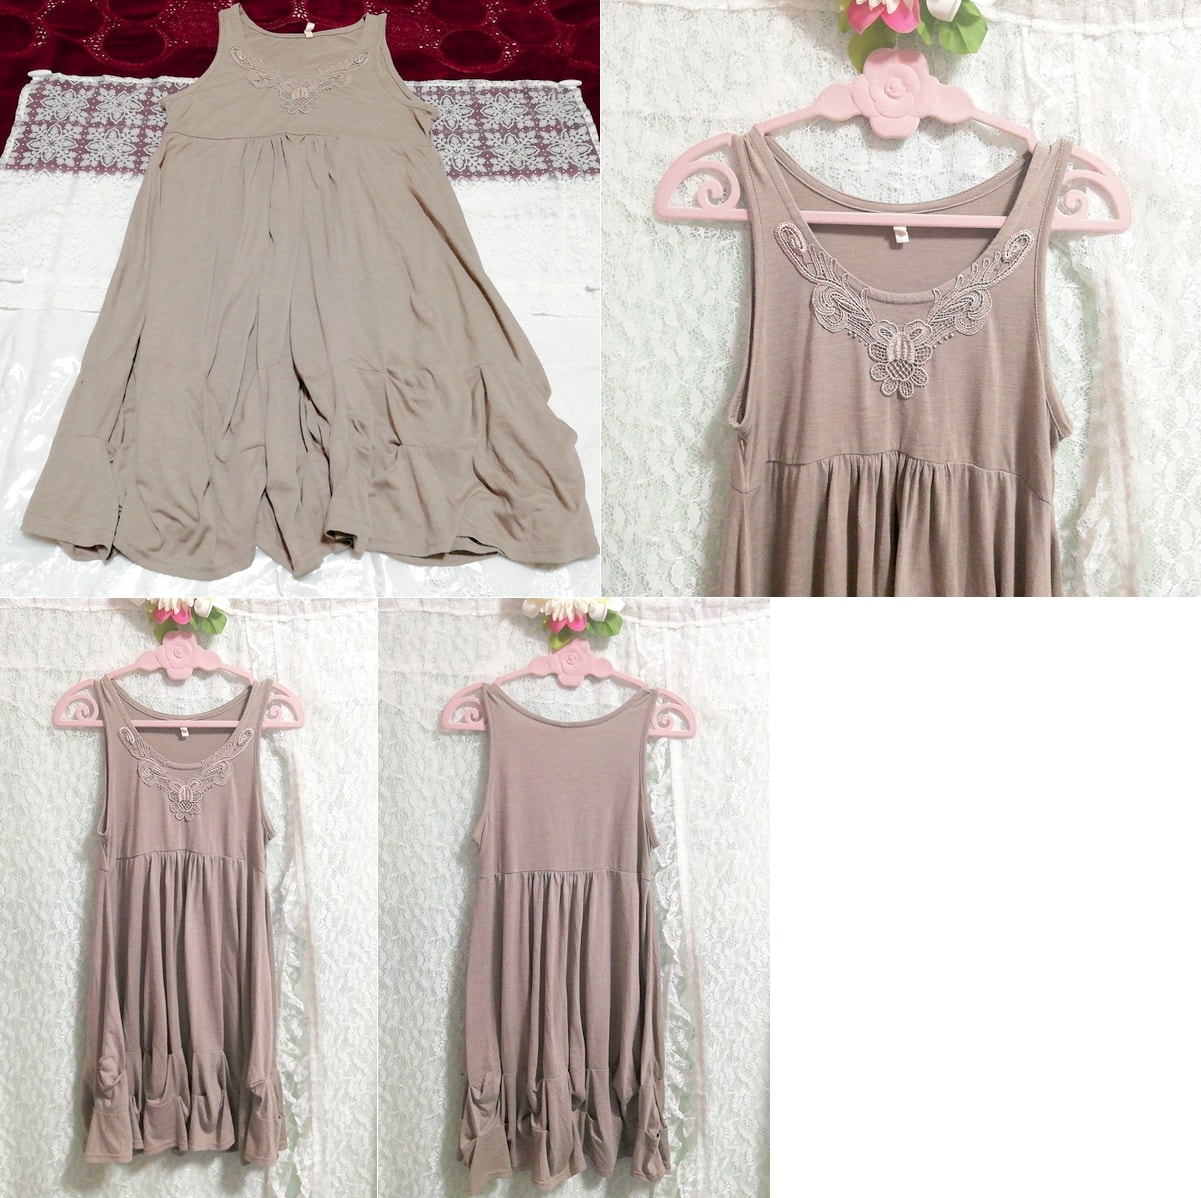 Gray gray brown skirt negligee nightgown sleeveless dress, knee length skirt, m size